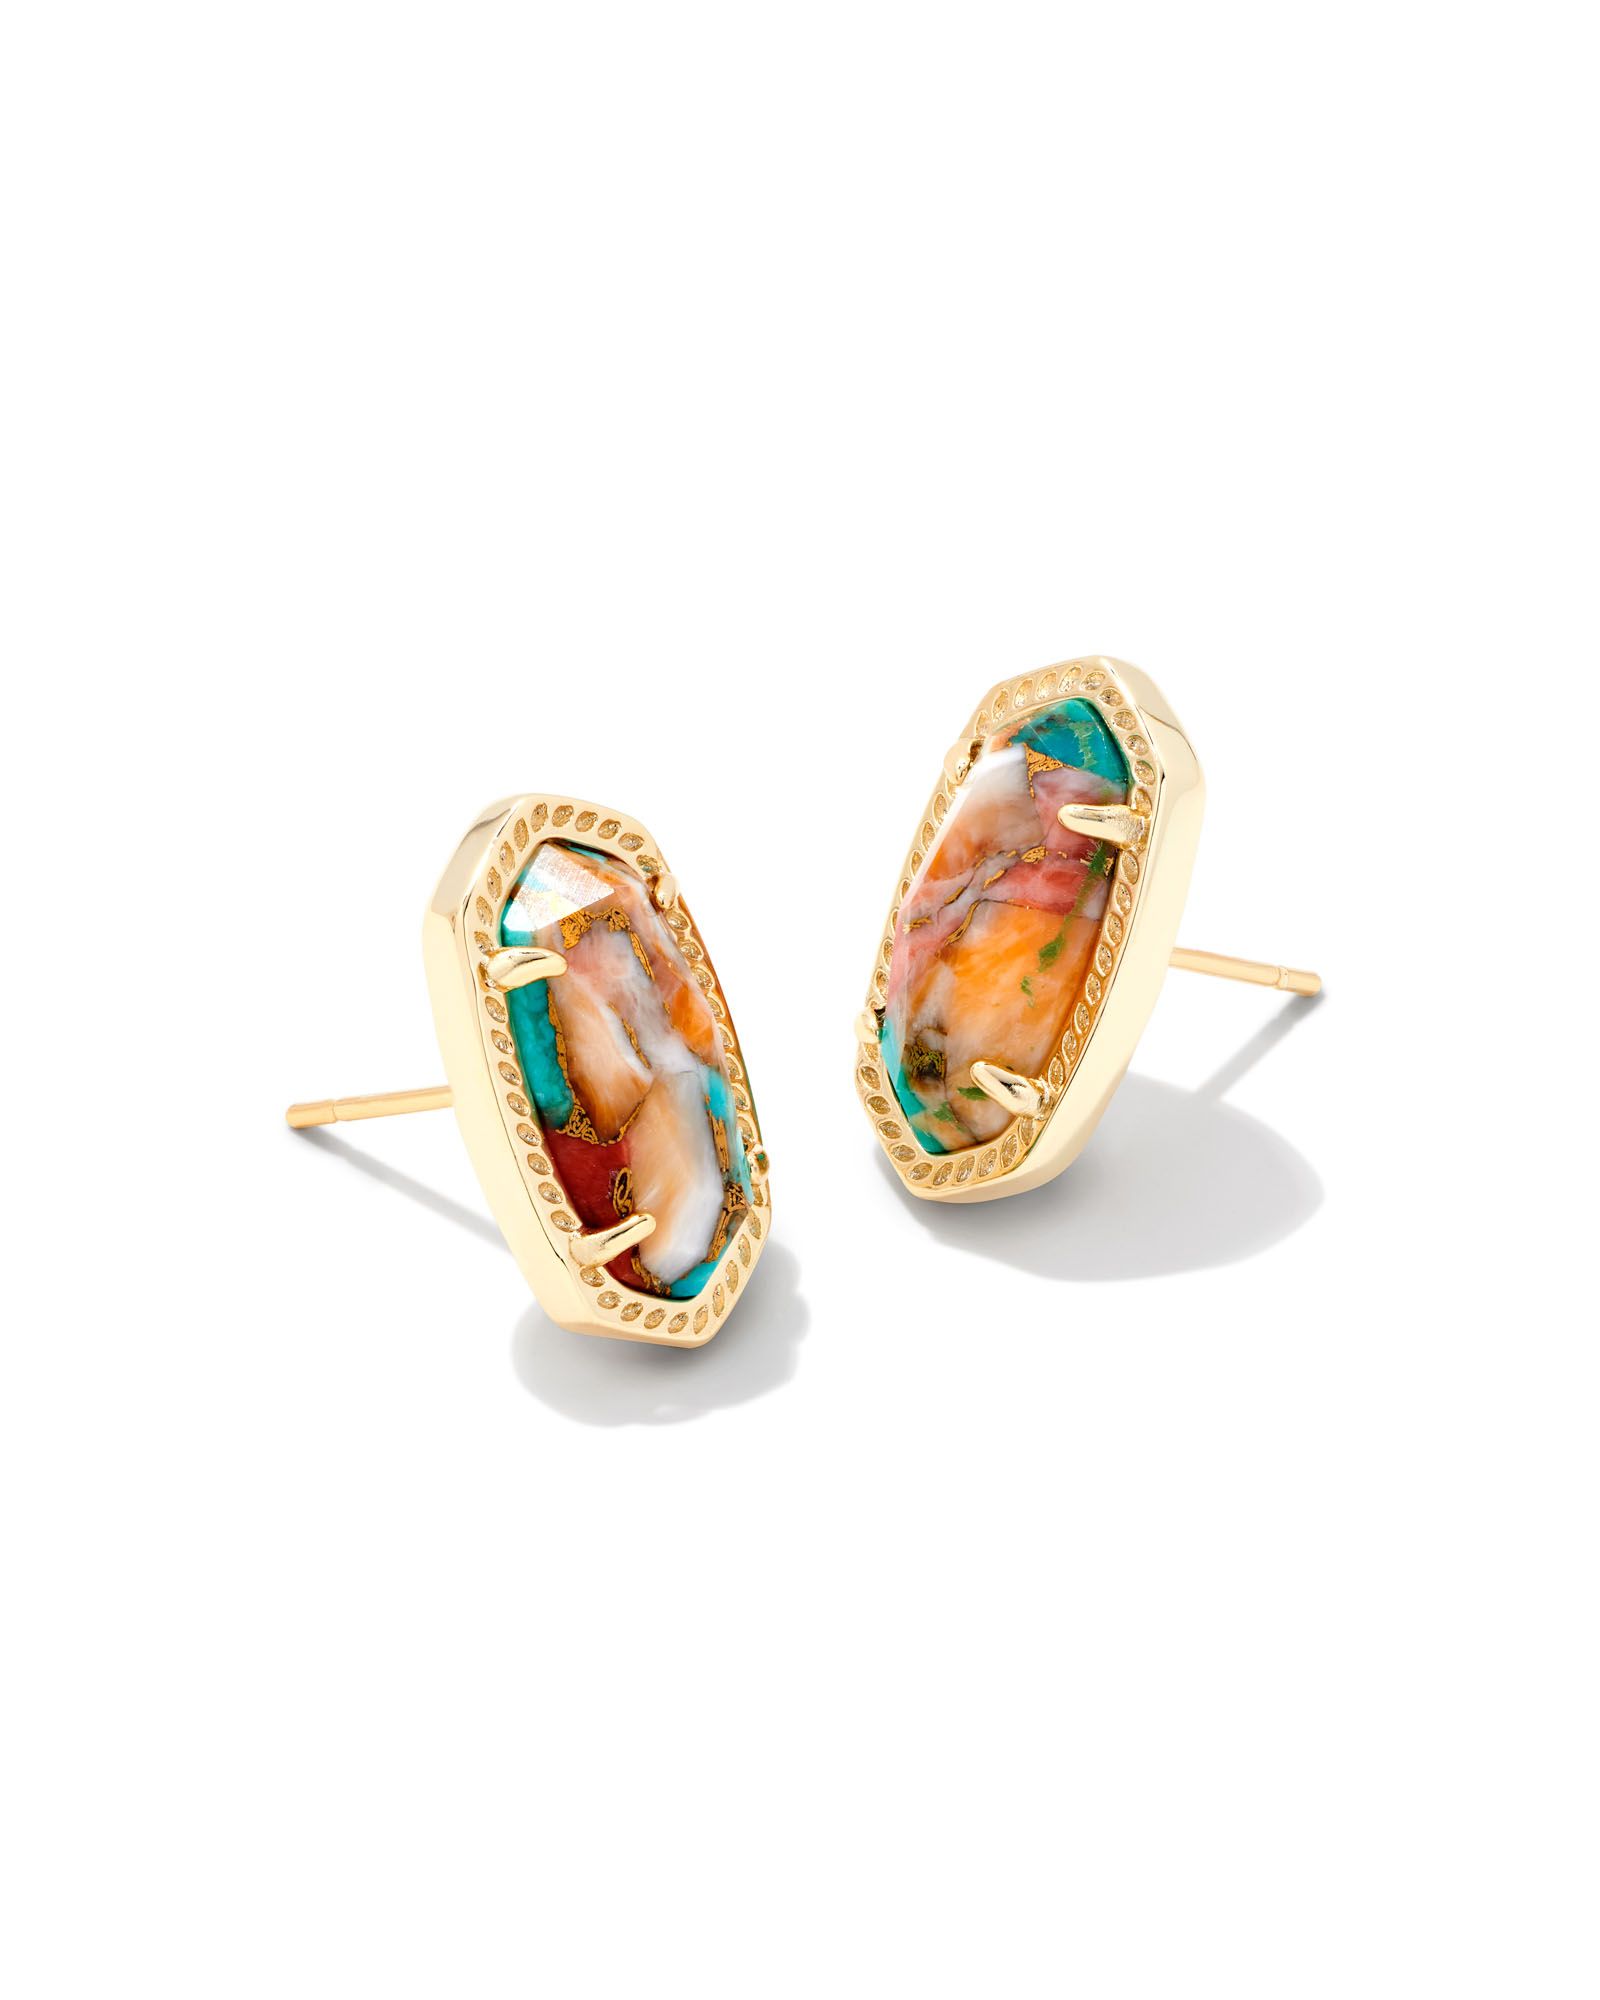 Ellie Gold Stud Earrings in Bronze Veined Turquoise Magnesite Red Oyster | Kendra Scott | Kendra Scott